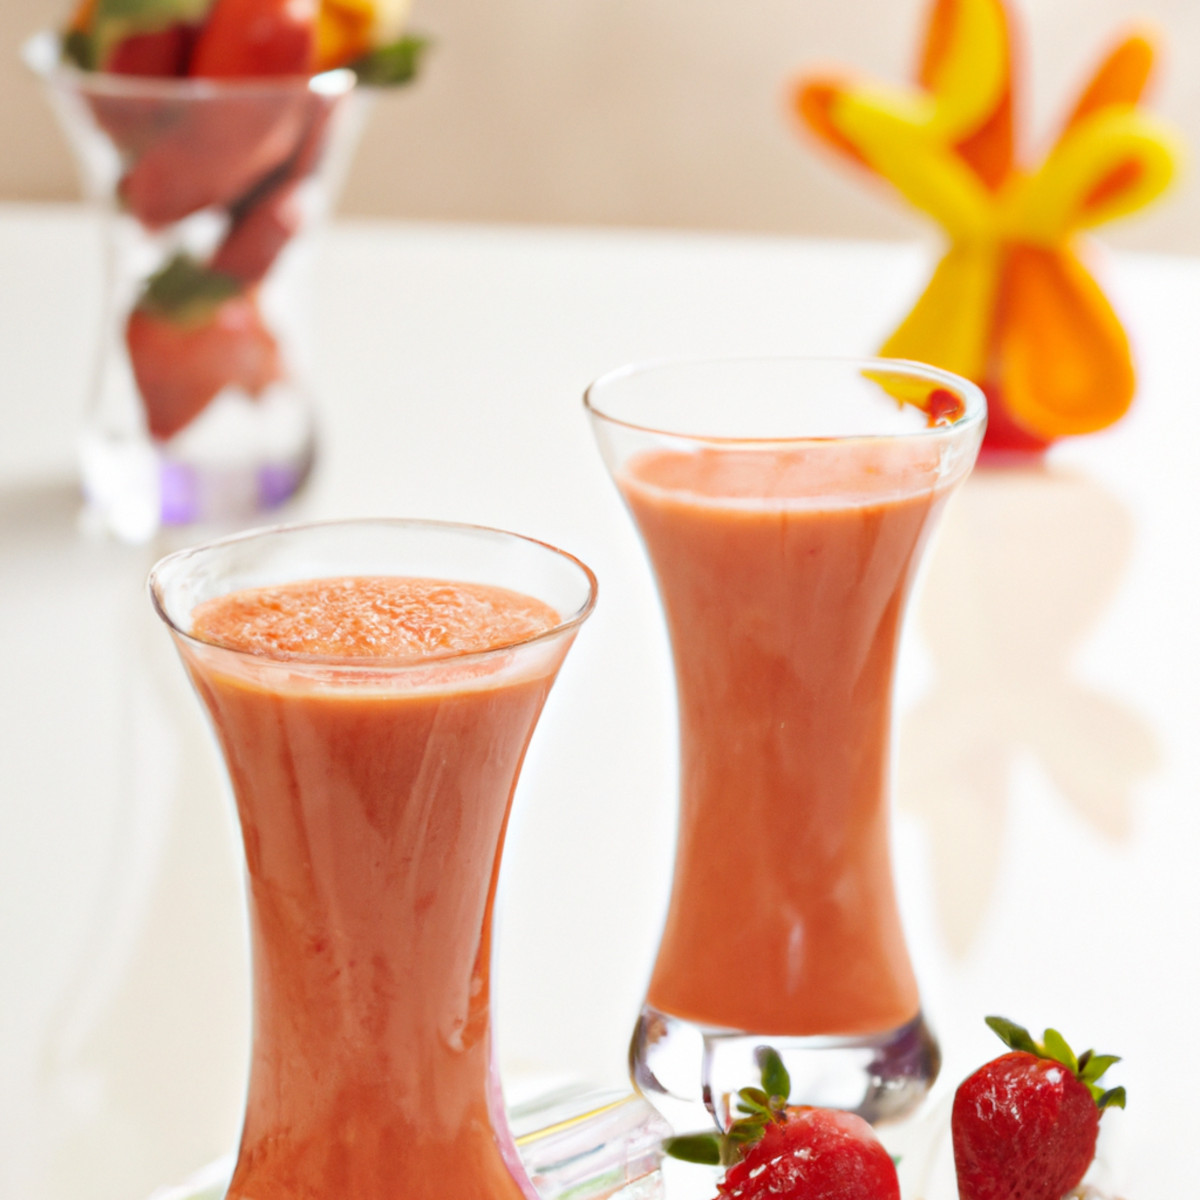 strawberry and orange smoothie